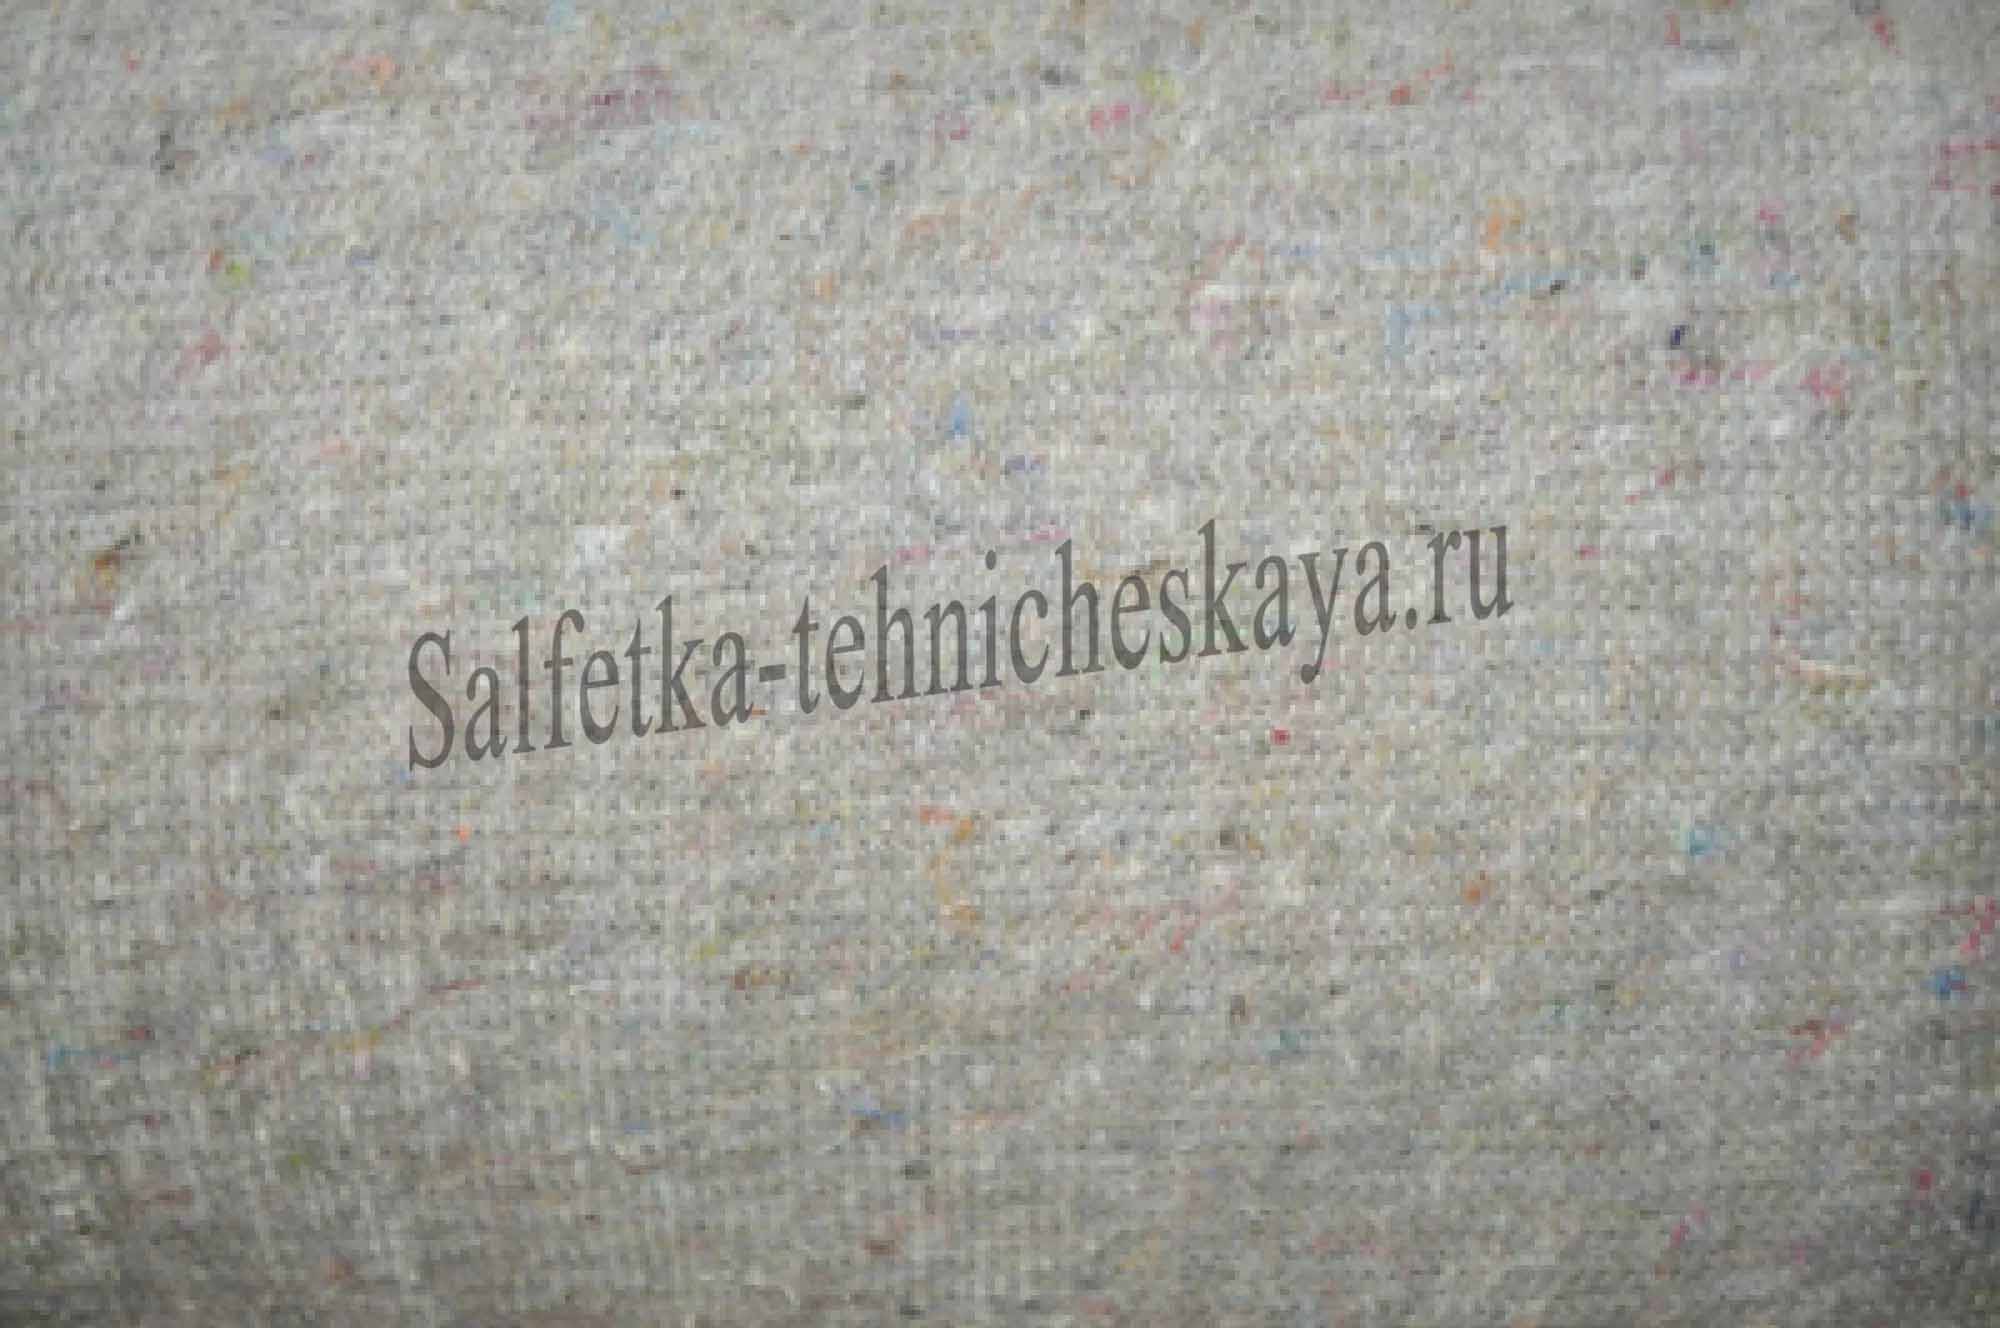 Нетканое полотно на сайте salfetka-tehnicheskaya.ru.